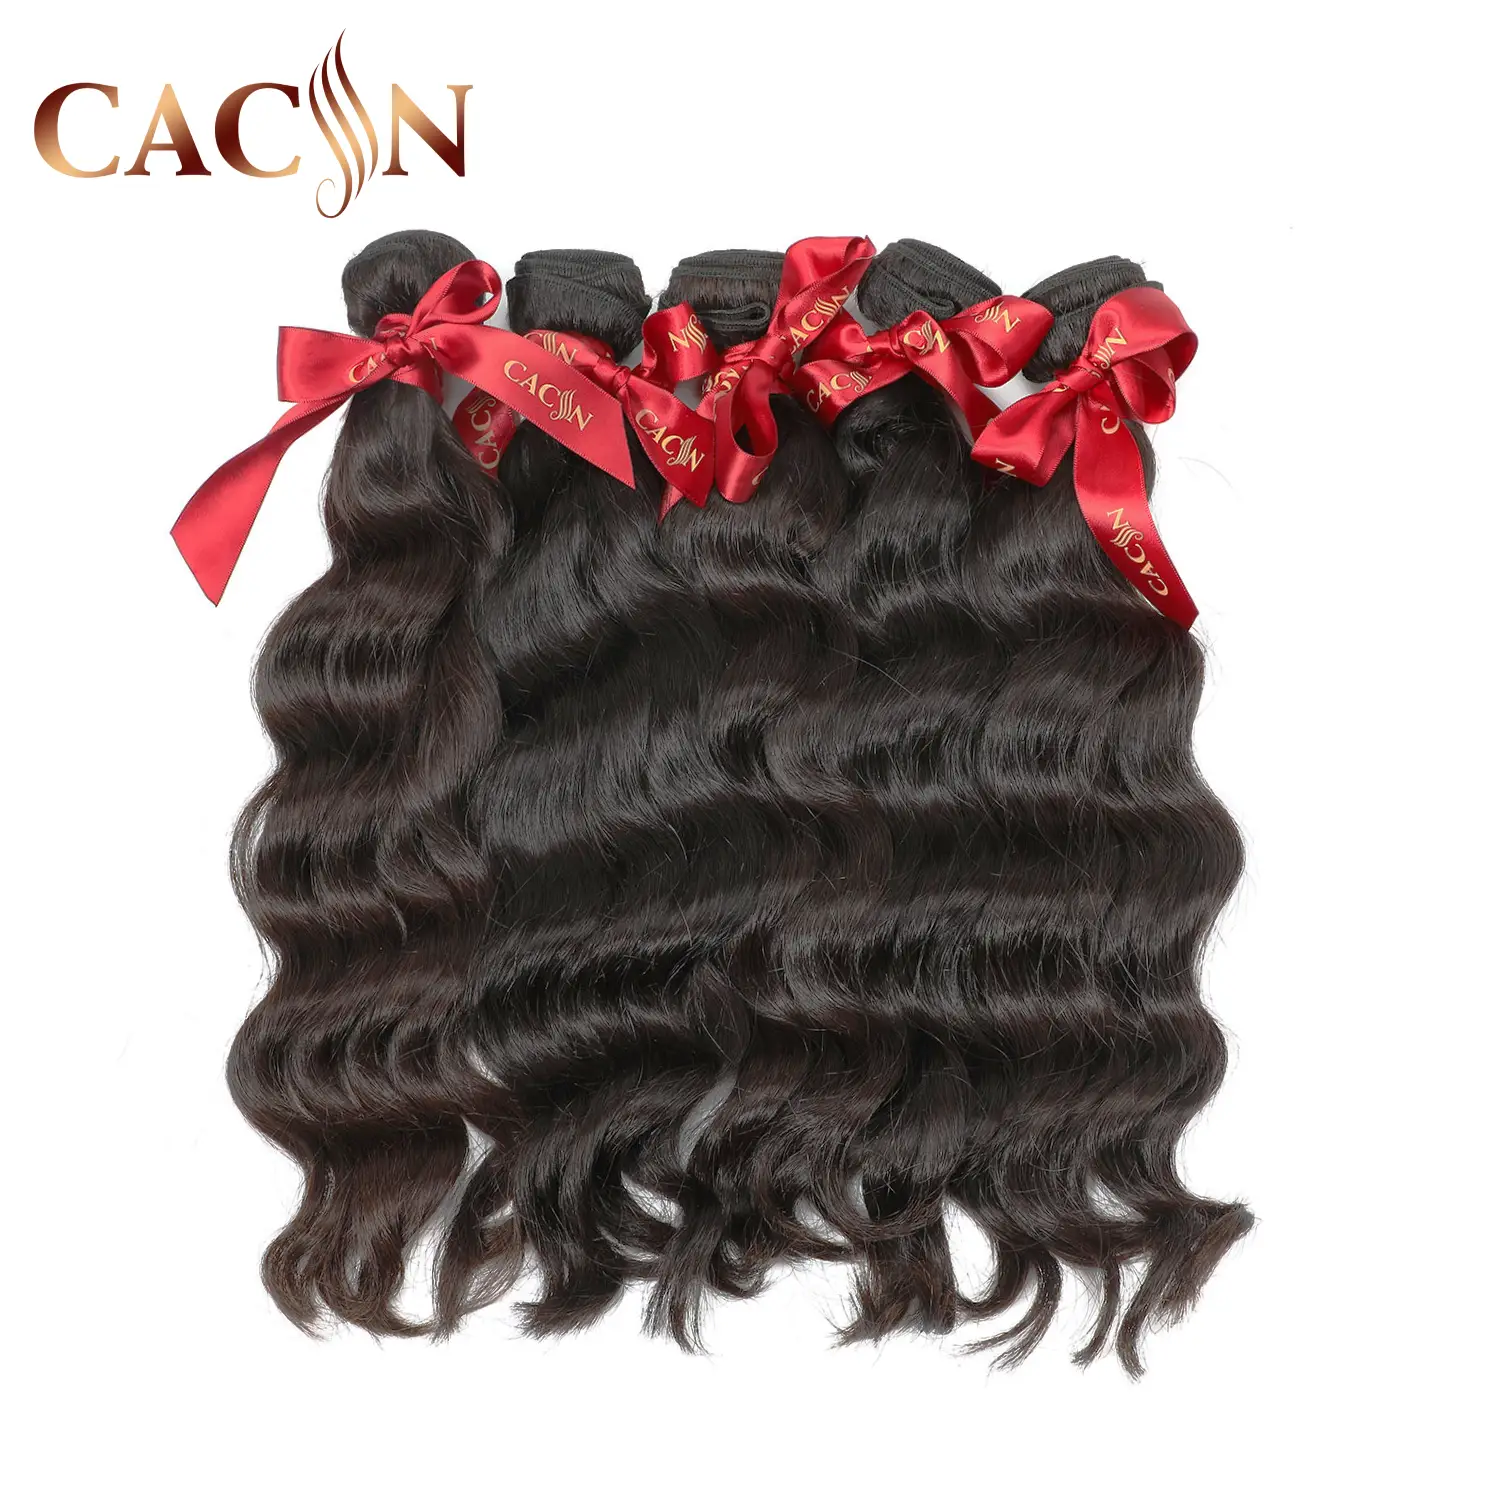 Raw virgin Malaysian human hair weave natural wave 1 bundle, 100% raw hair, free shipping